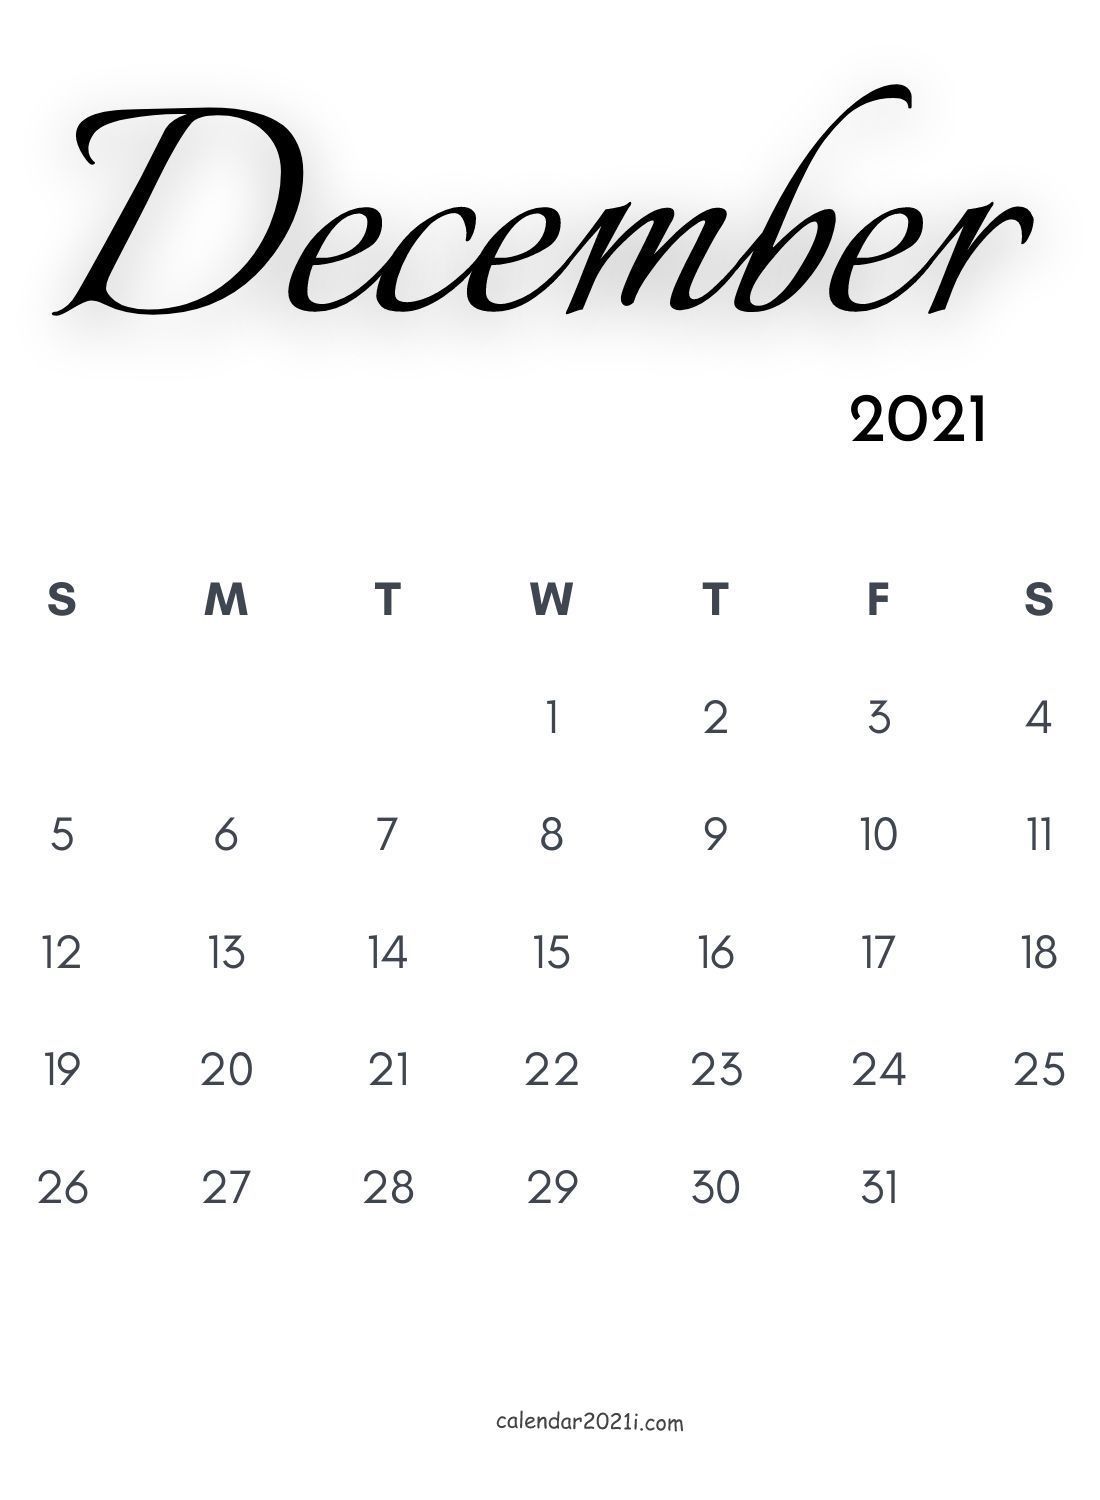 December 2021 Calligraphy Calendar free download. Calligraphy calendar, Monthly calendar printable, Free printable calendar